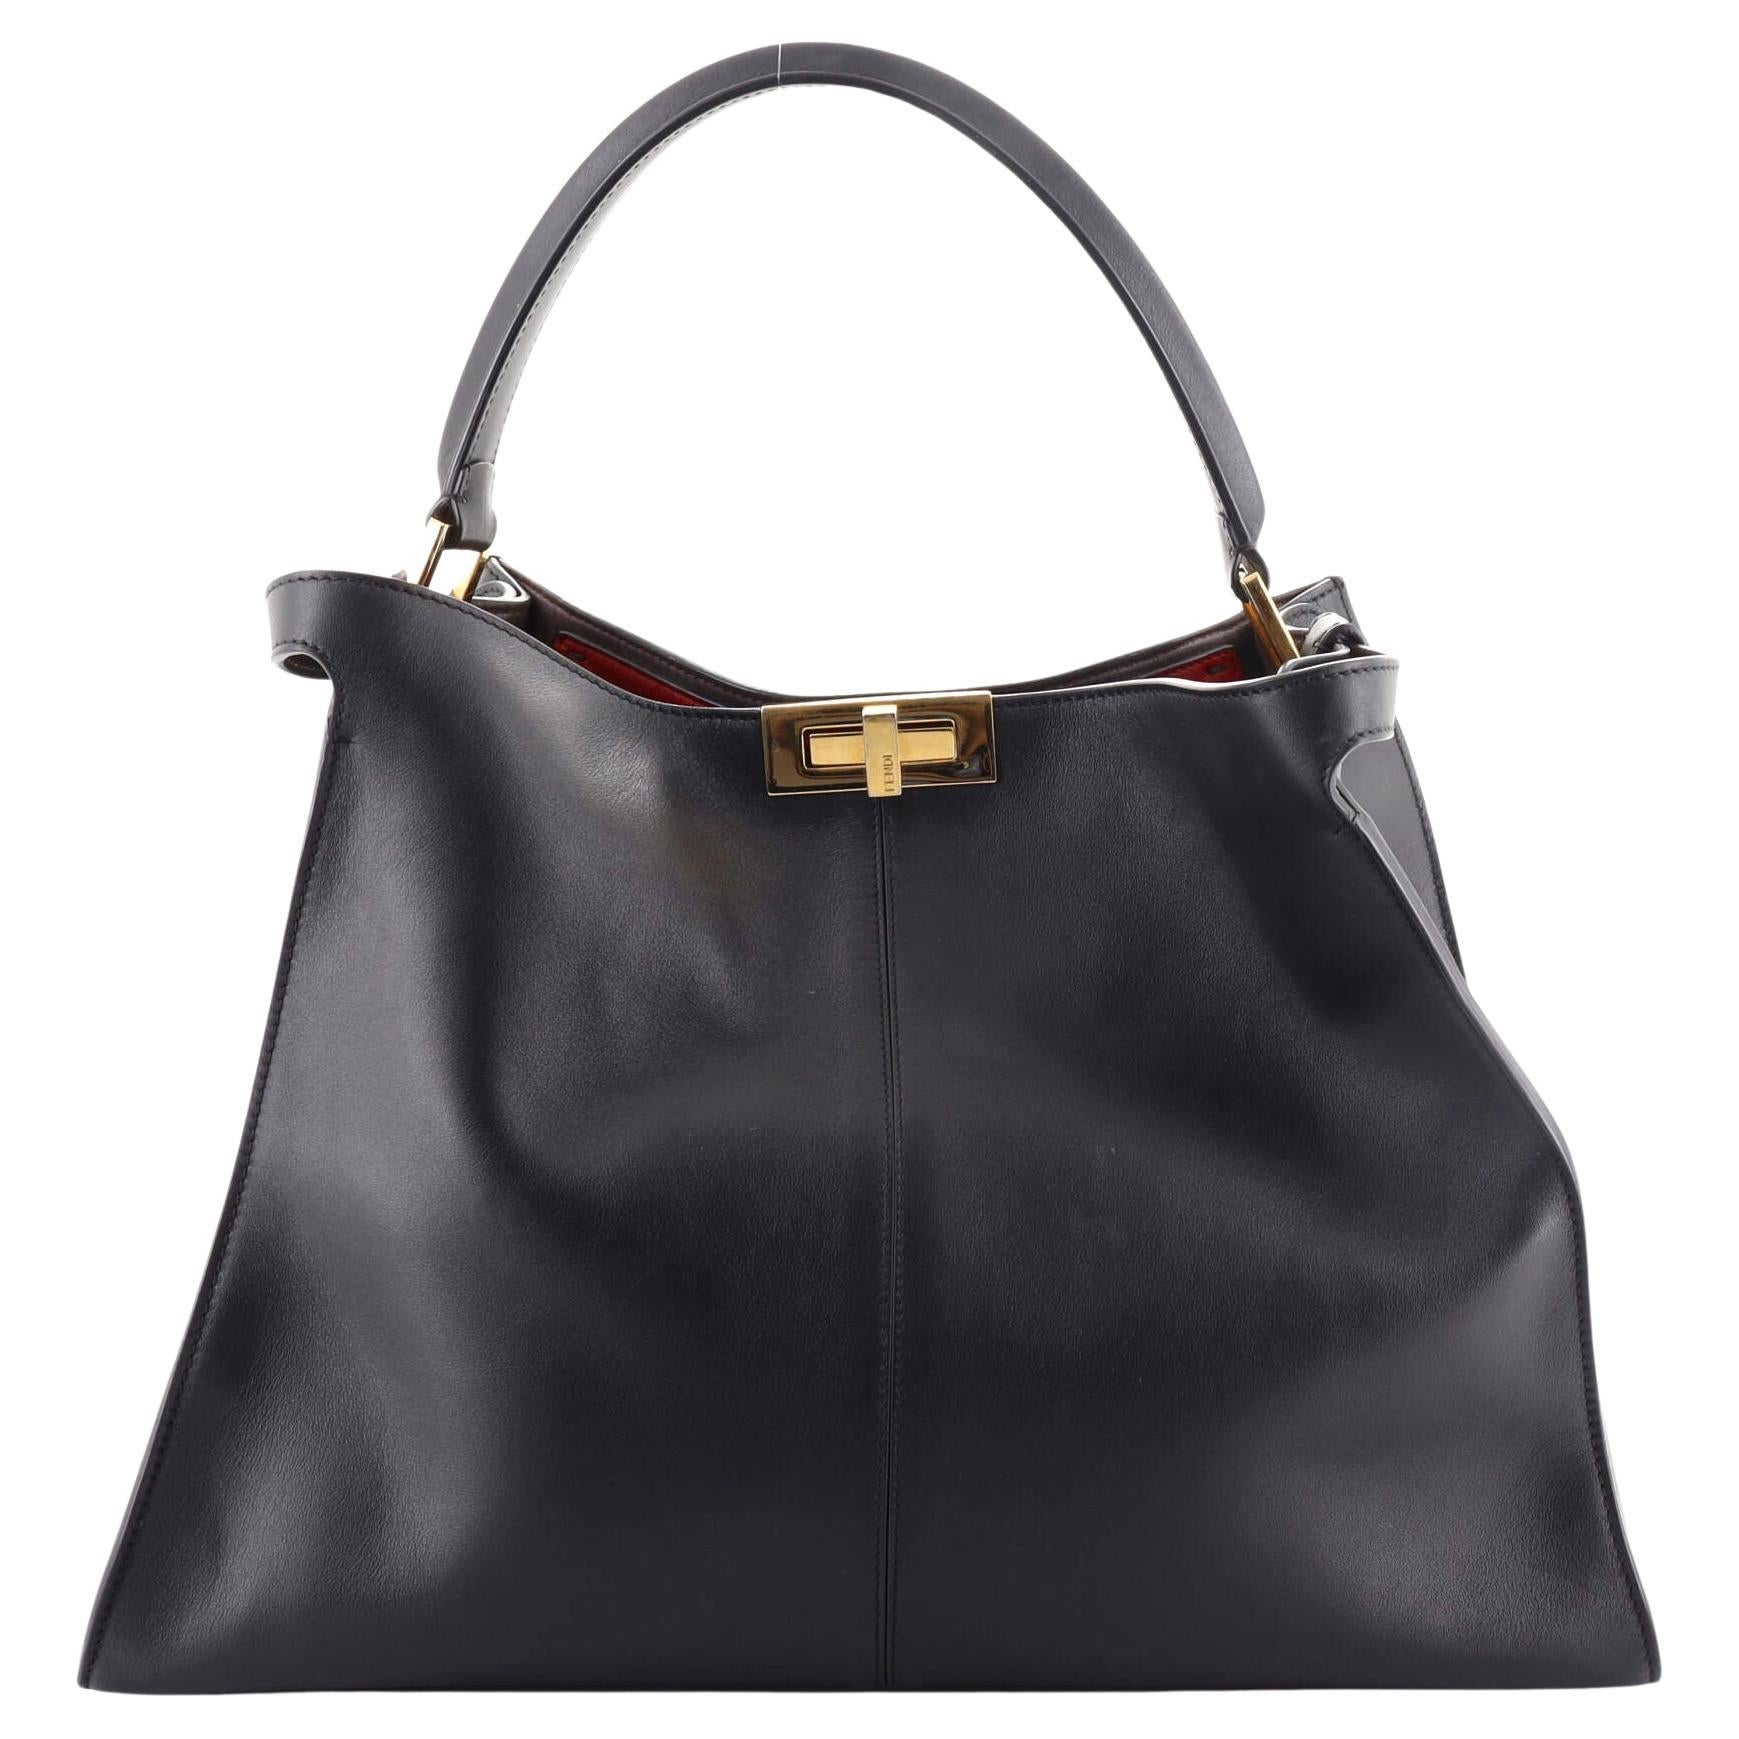 Fendi Peekaboo X-Lite Bag Leather Large